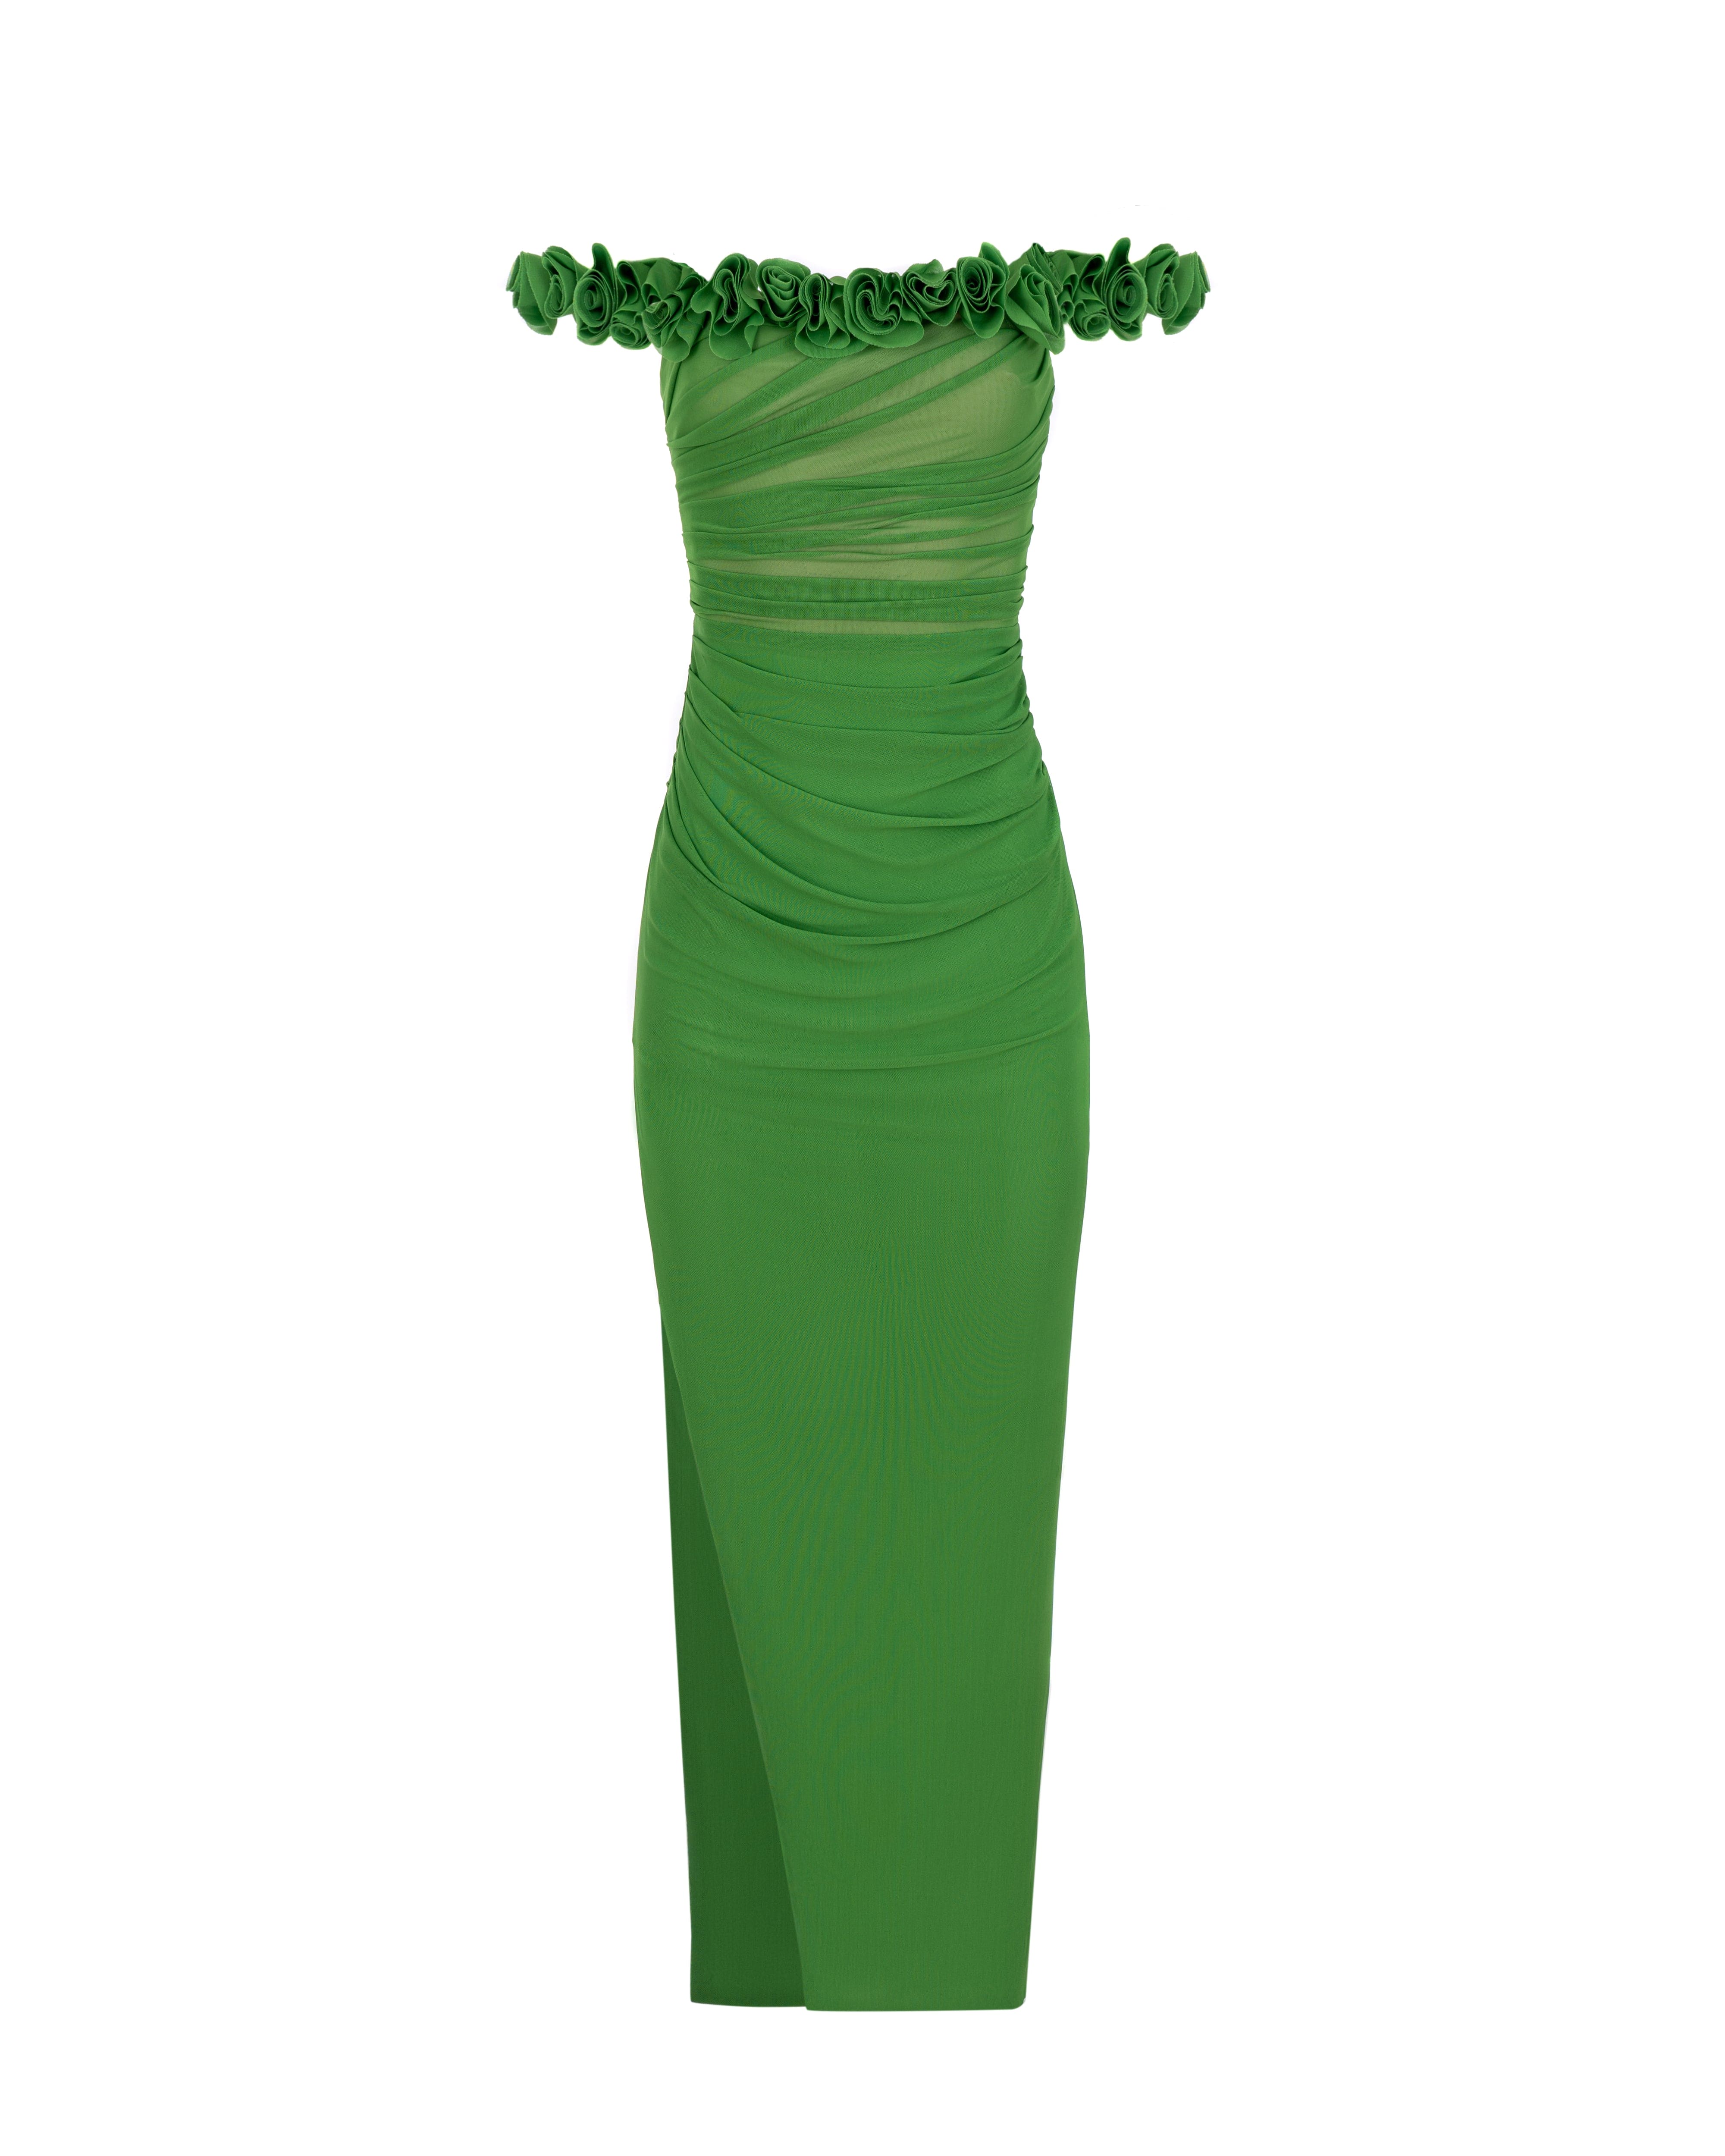 Curvy Sheath Dress with Zipper on the back -HONORATA - Green